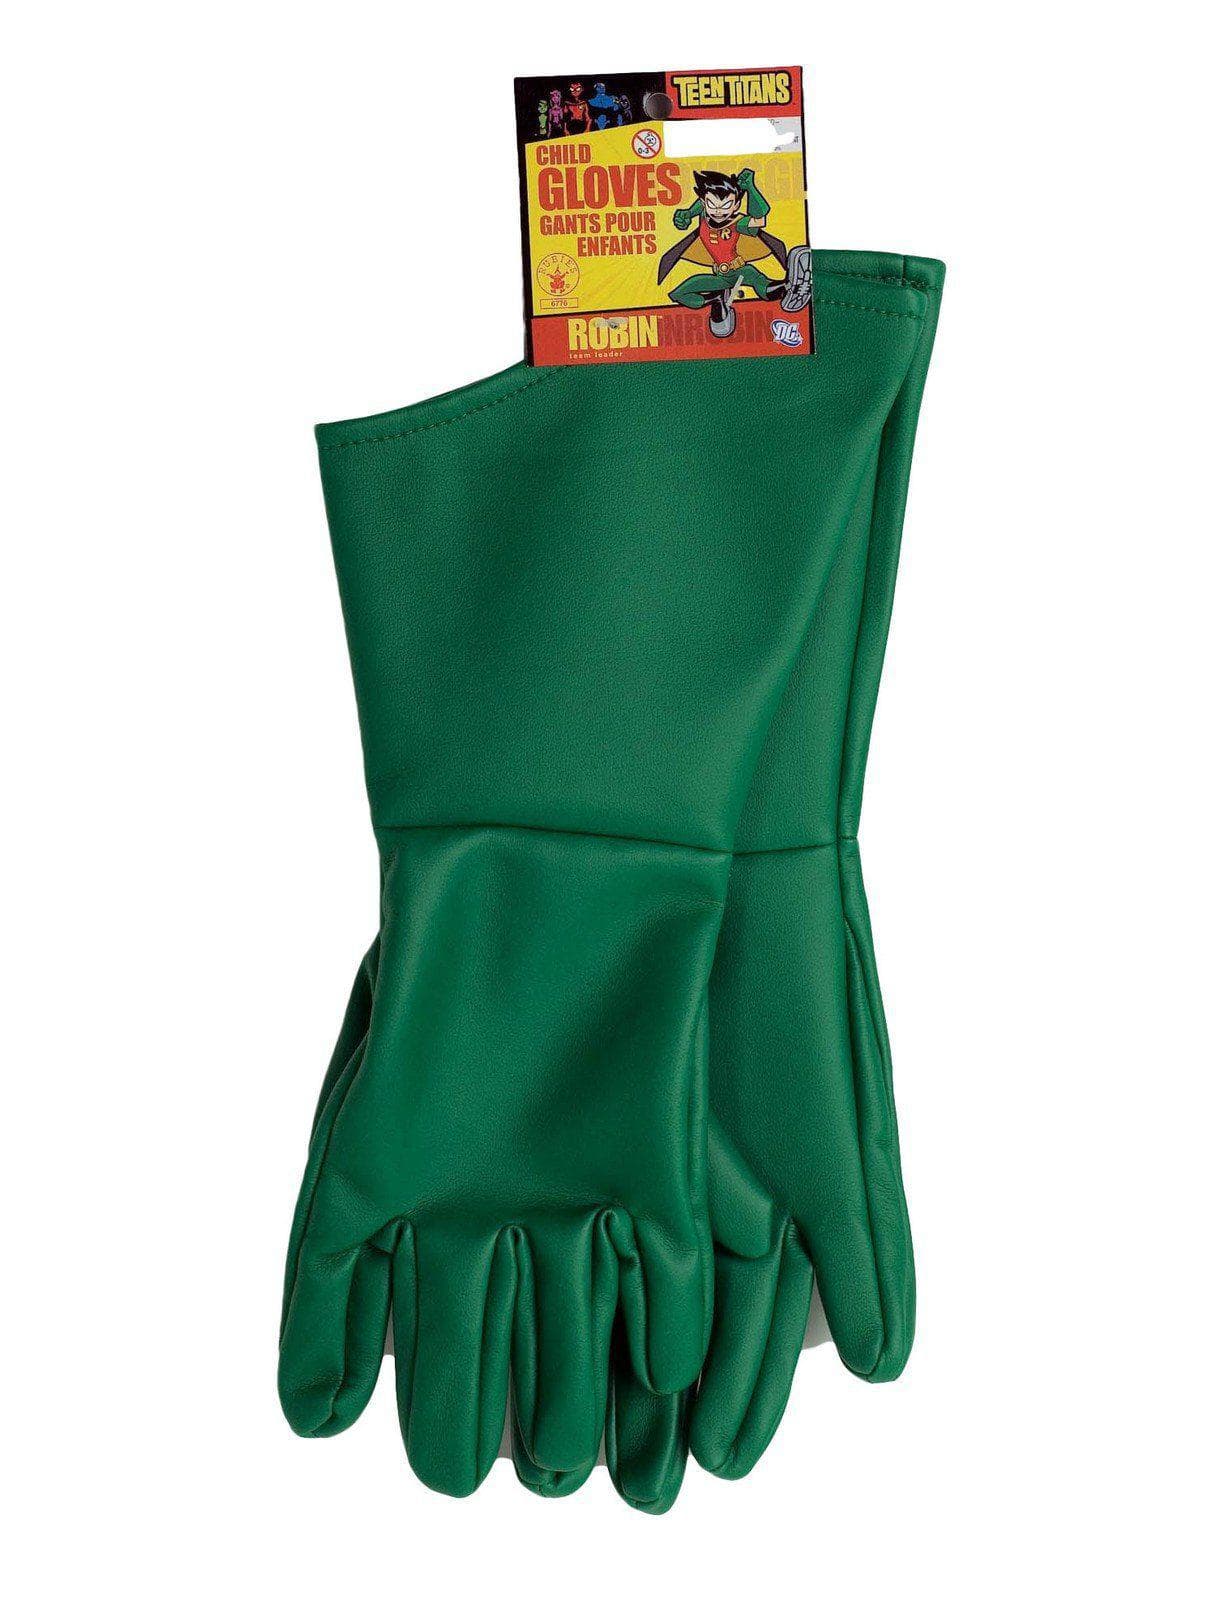 Boys' Teen Titan Robin Gloves - costumes.com